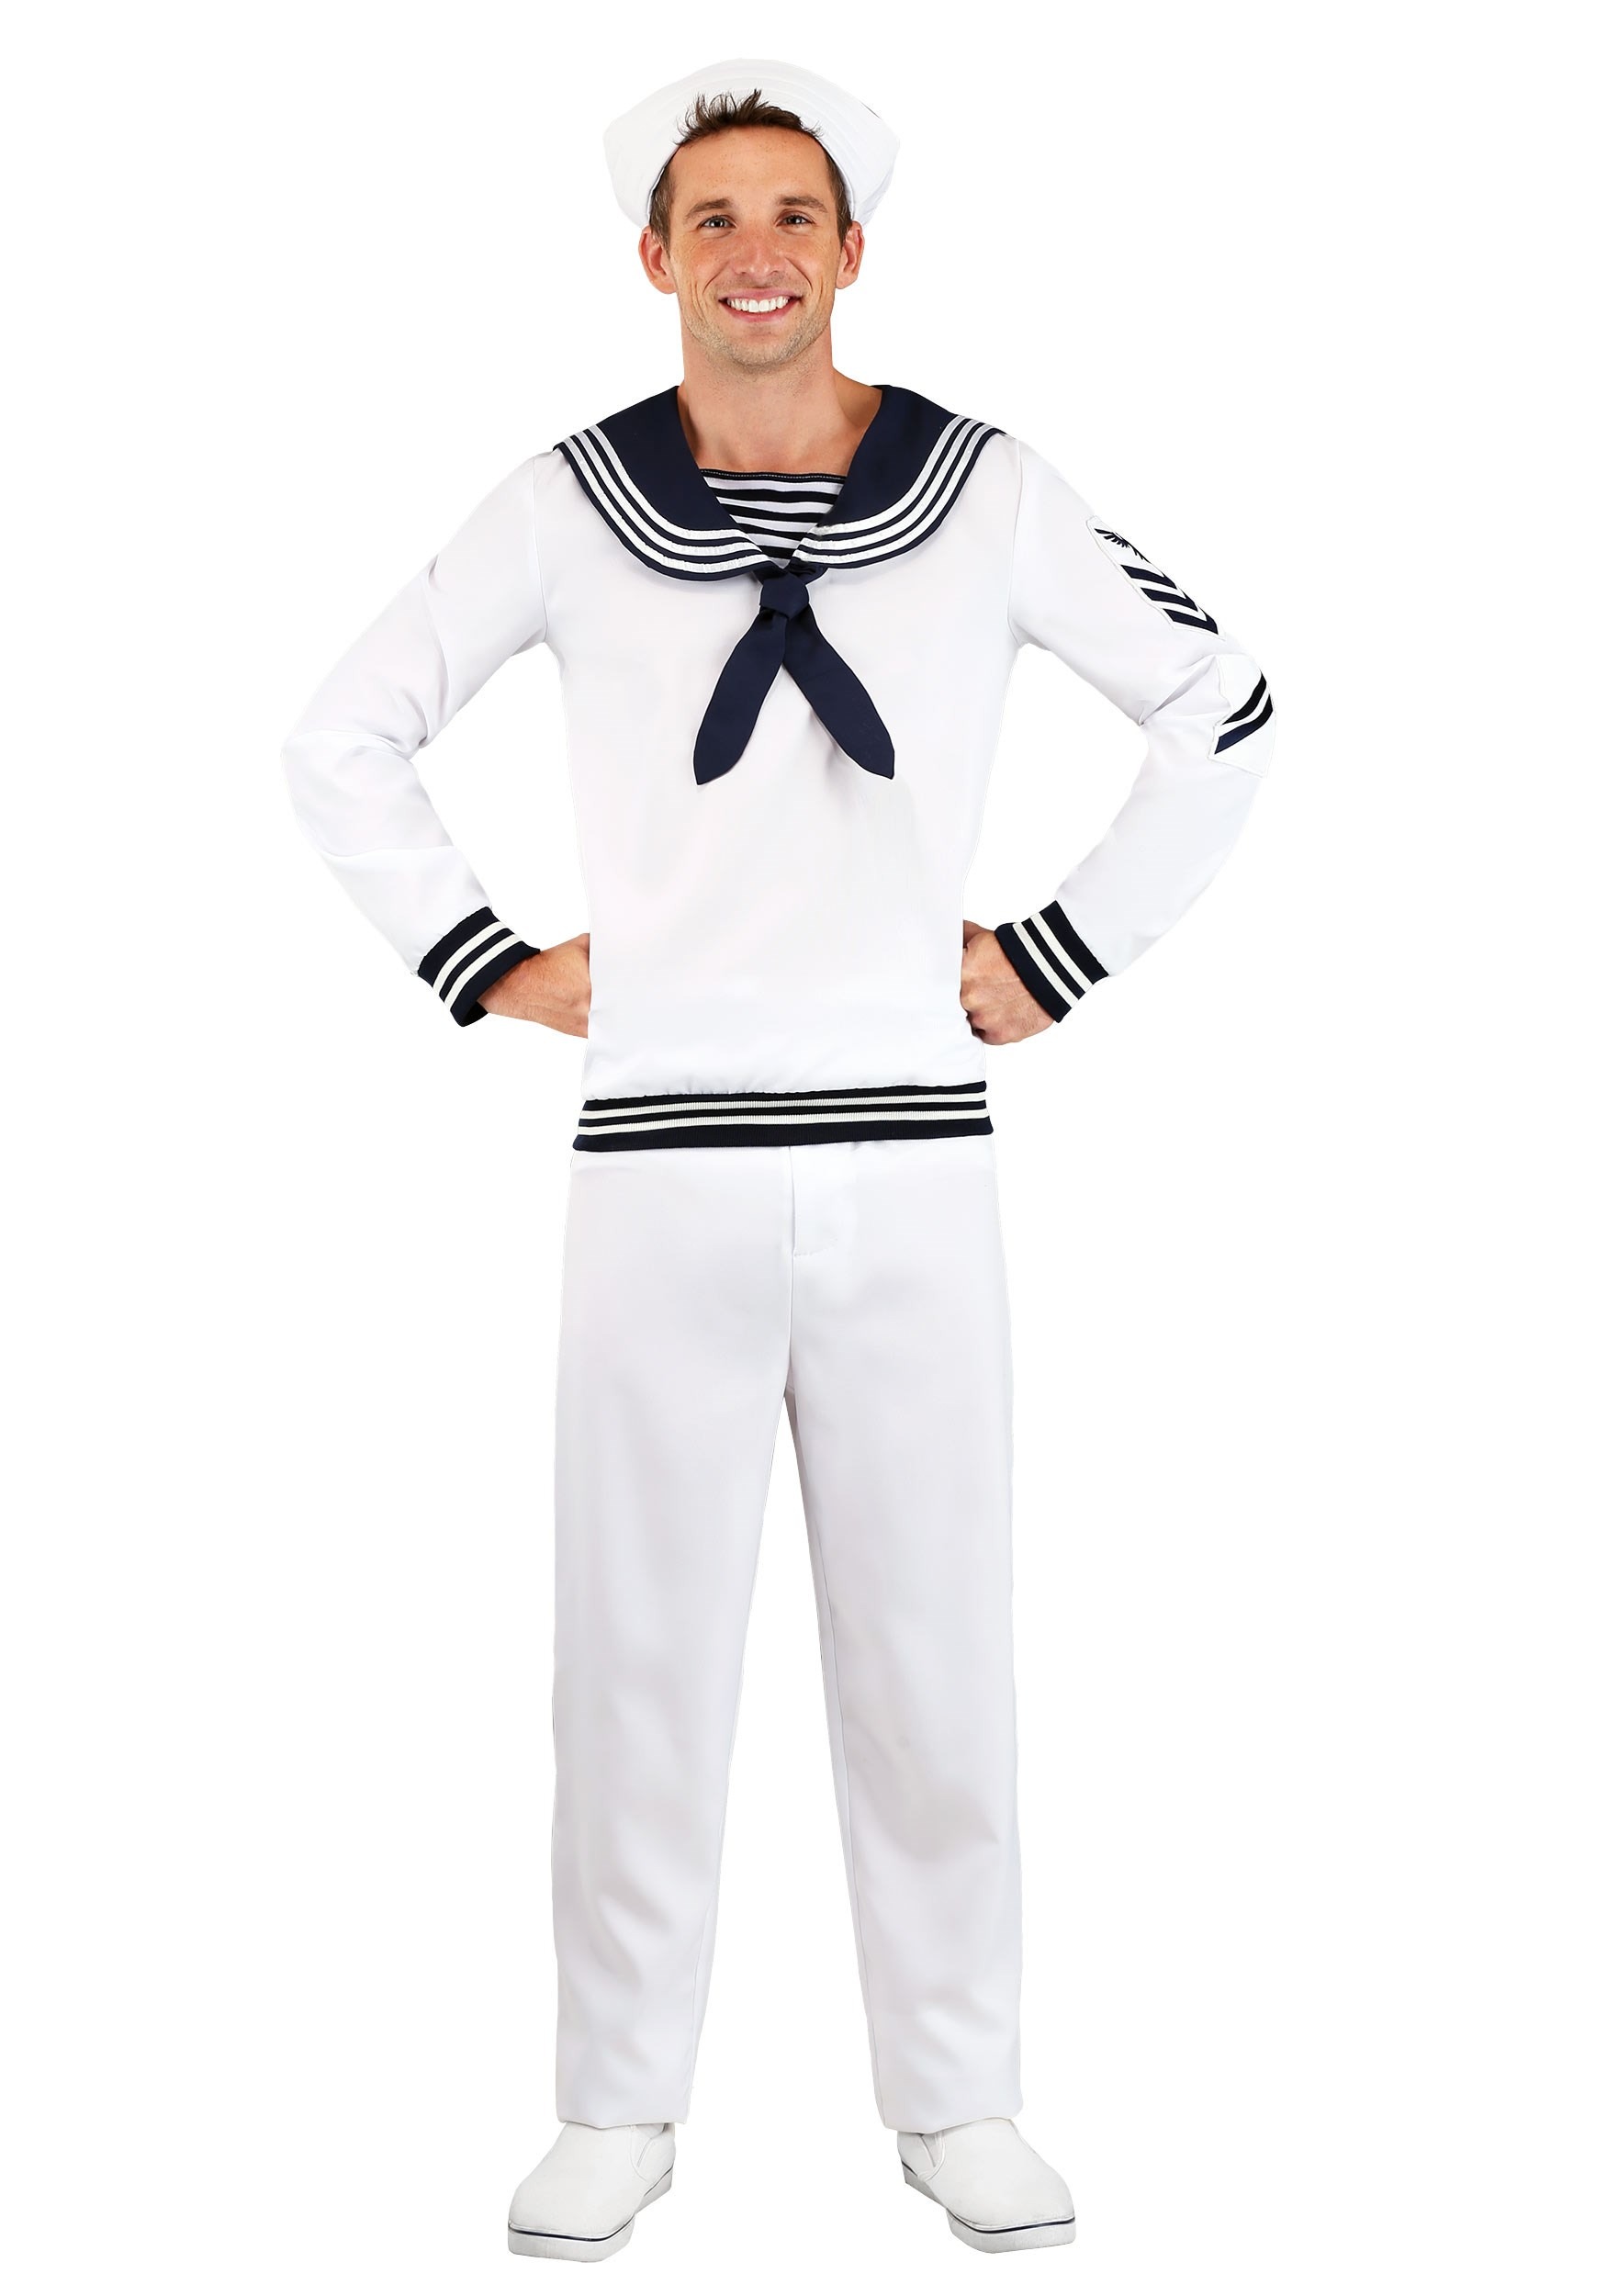 Photos - Fancy Dress FUN Costumes Deckhand Sailor Costume for Men Blue/White